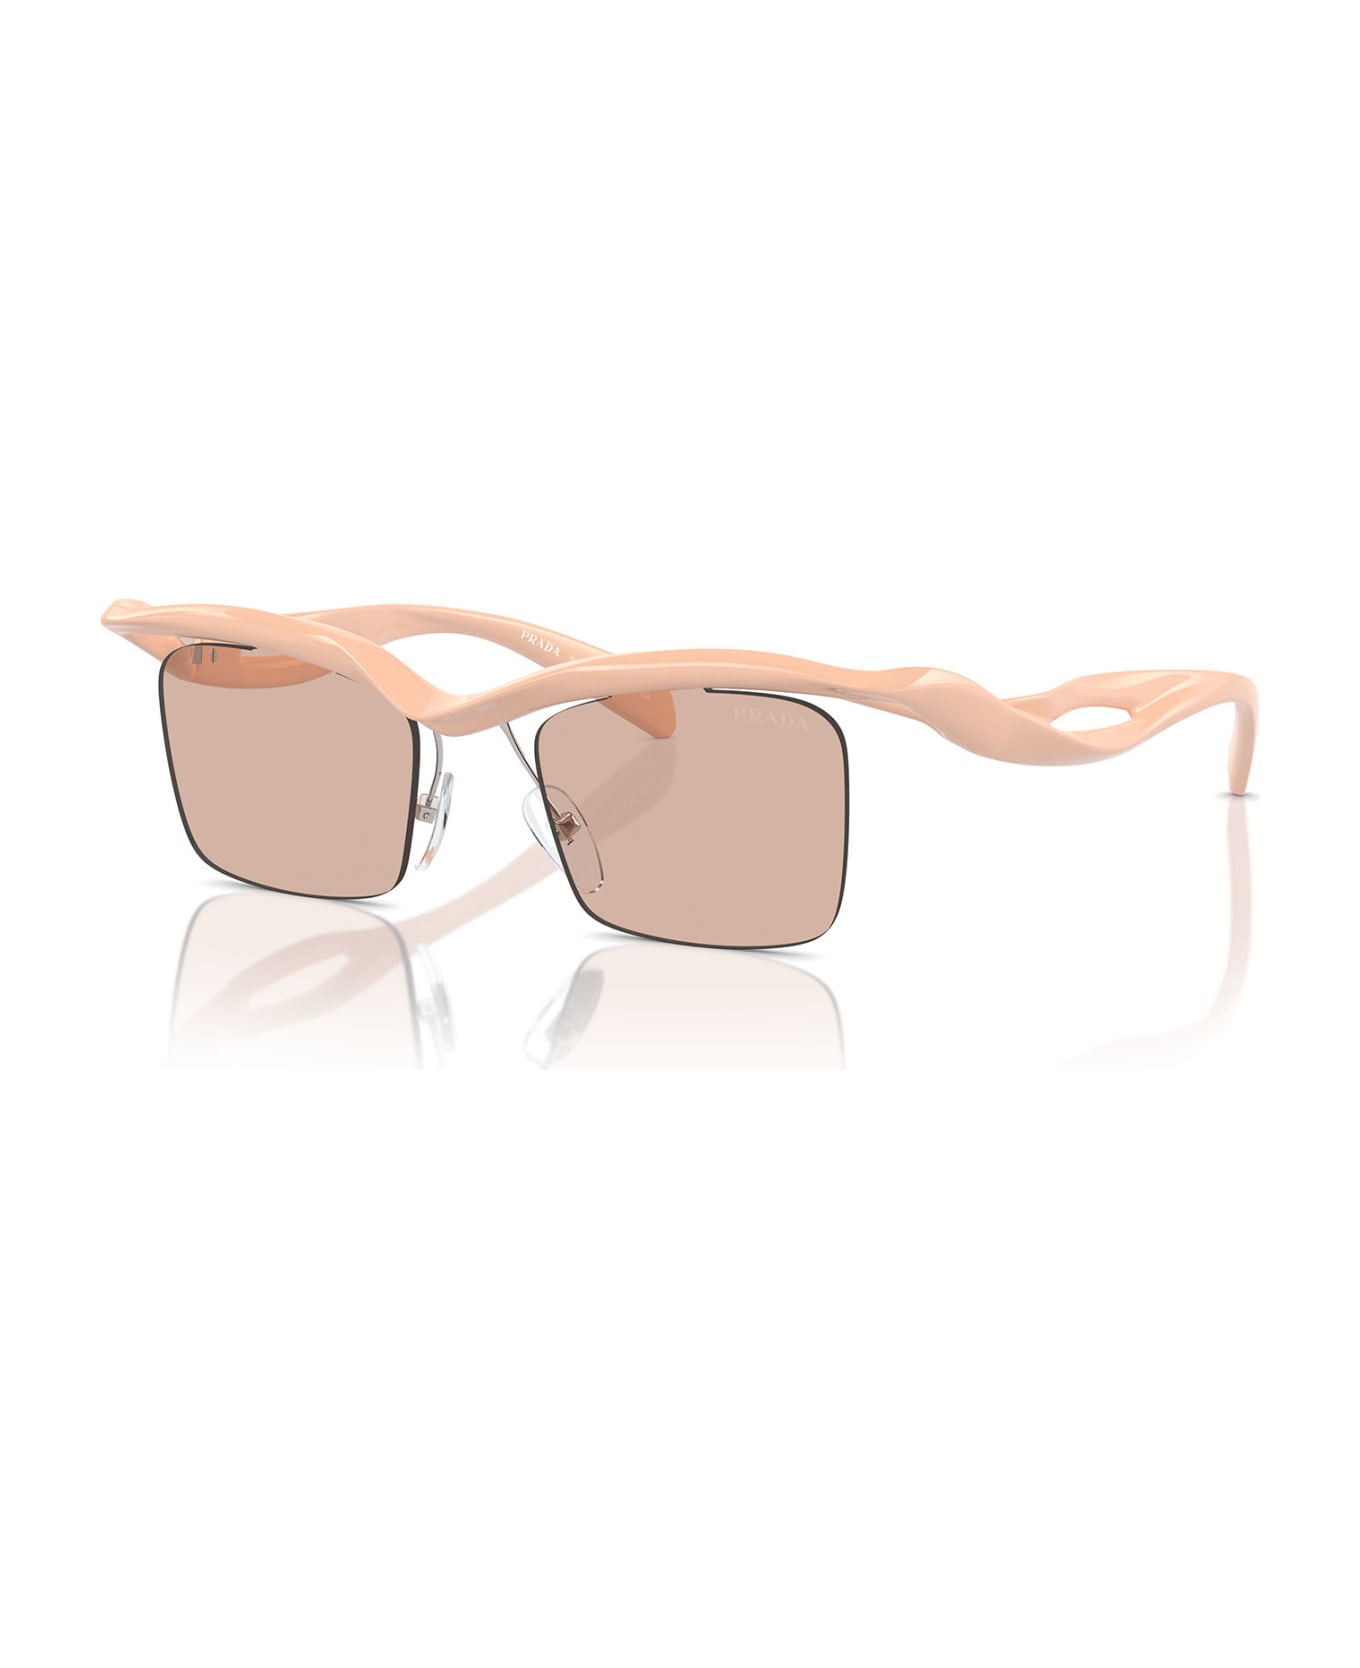 Prada Eyewear Pr A15s Peach Sunglasses - Peach サングラス